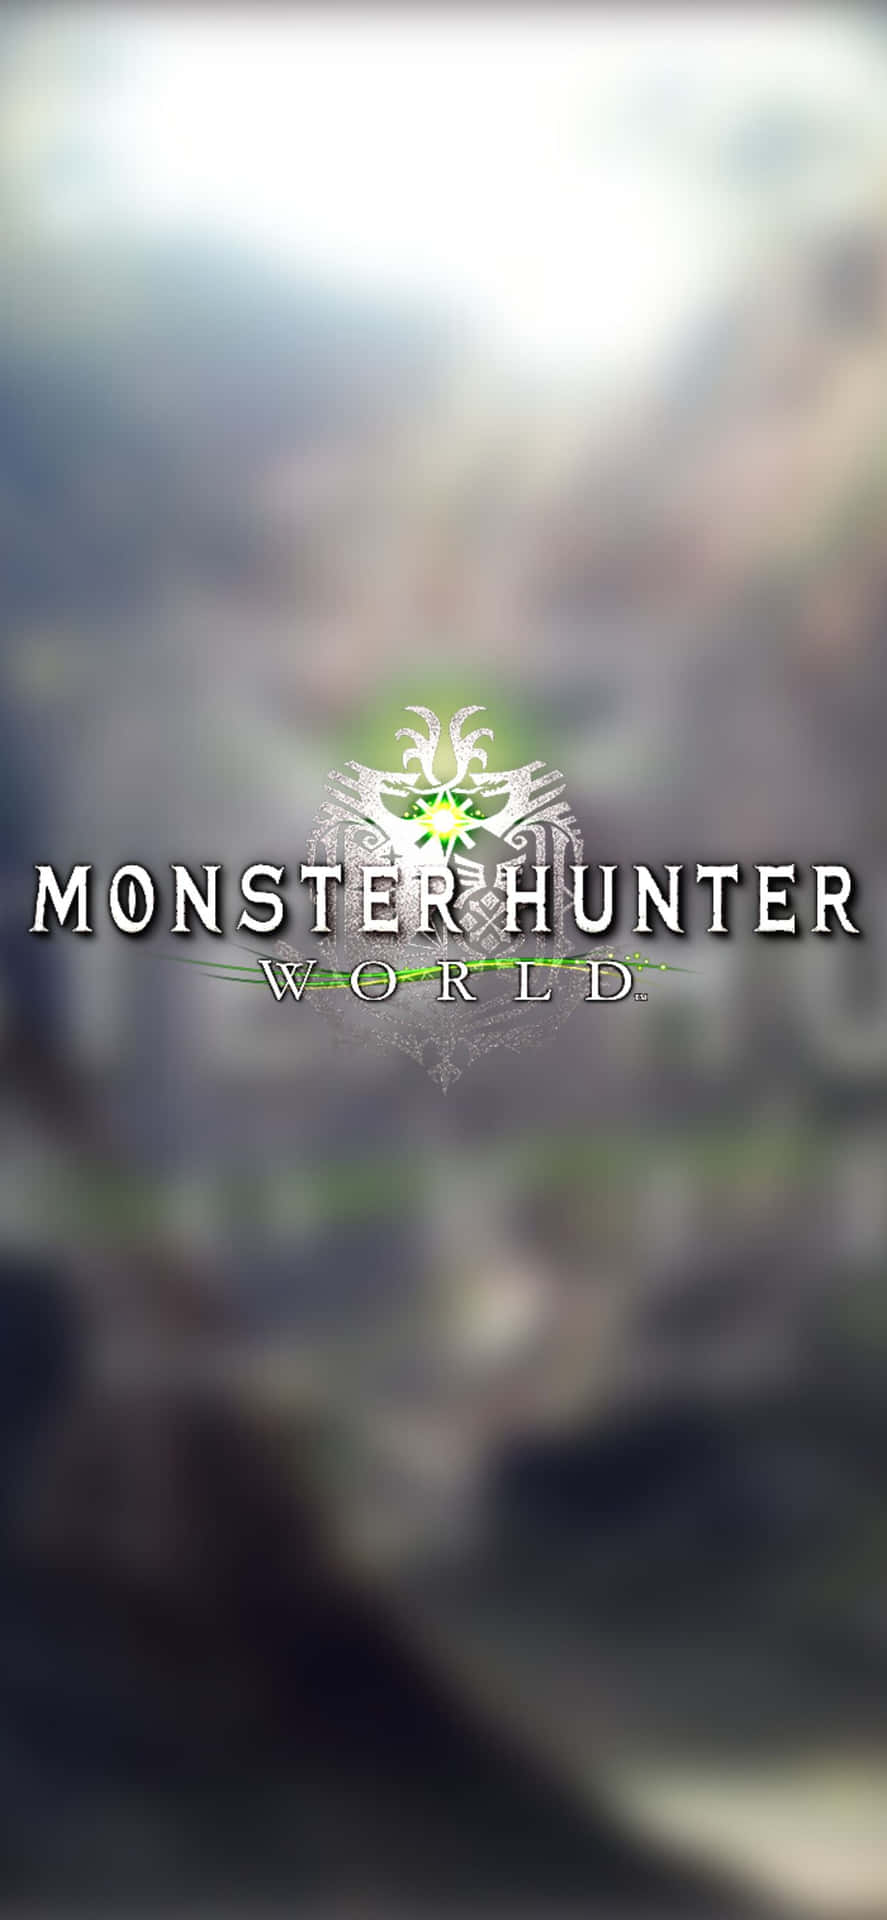 Sfondosfocato Monster Hunter World Per Iphone Xs Max